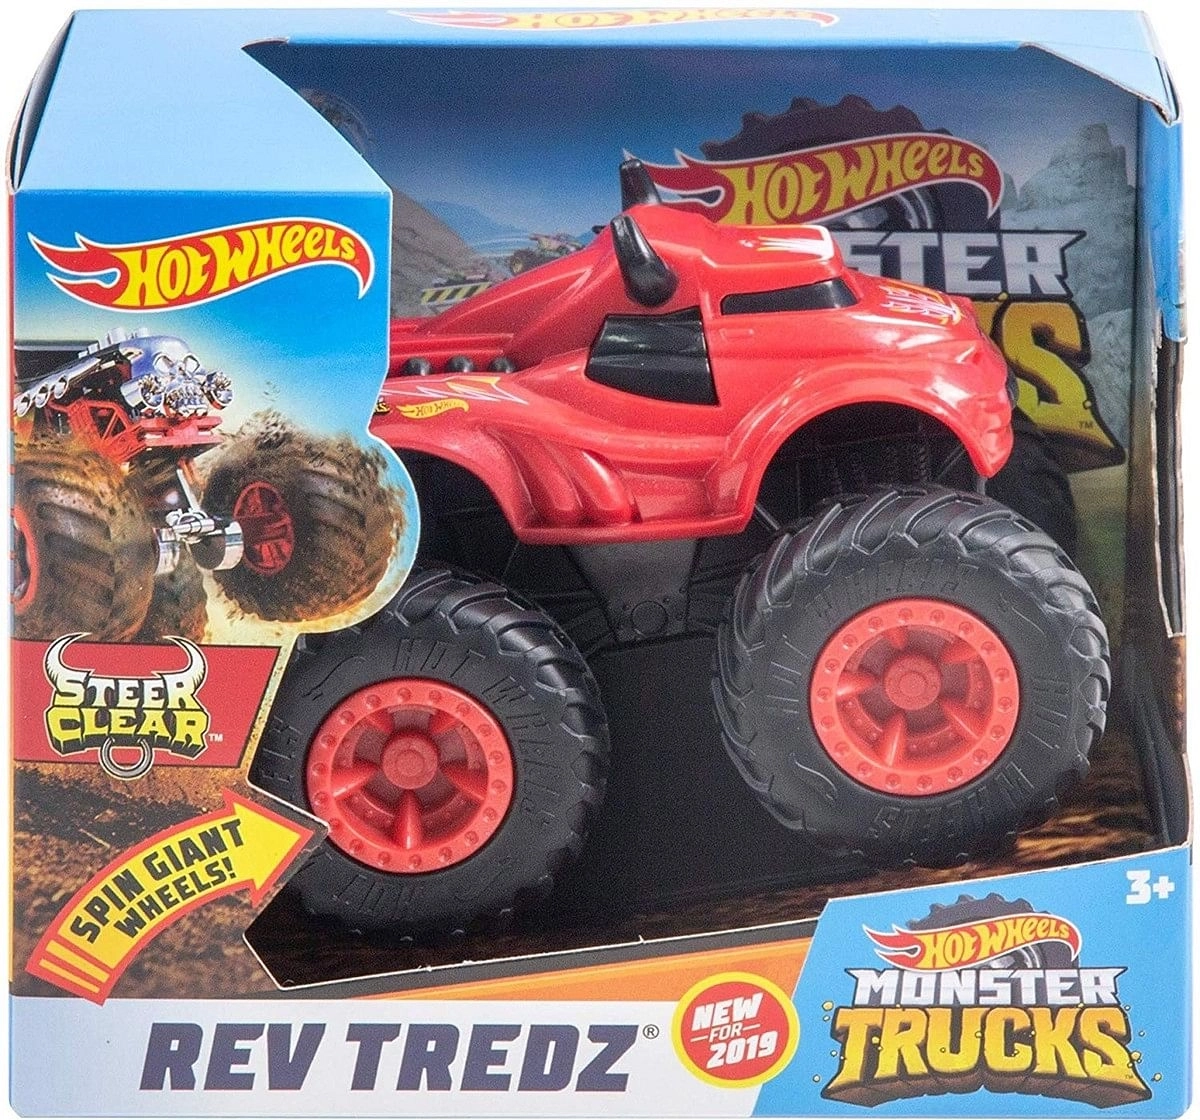 Hot Wheels Monster Trucks 1:43 Rev Tredz Vehicles for Kids age 3Y+, Assorted